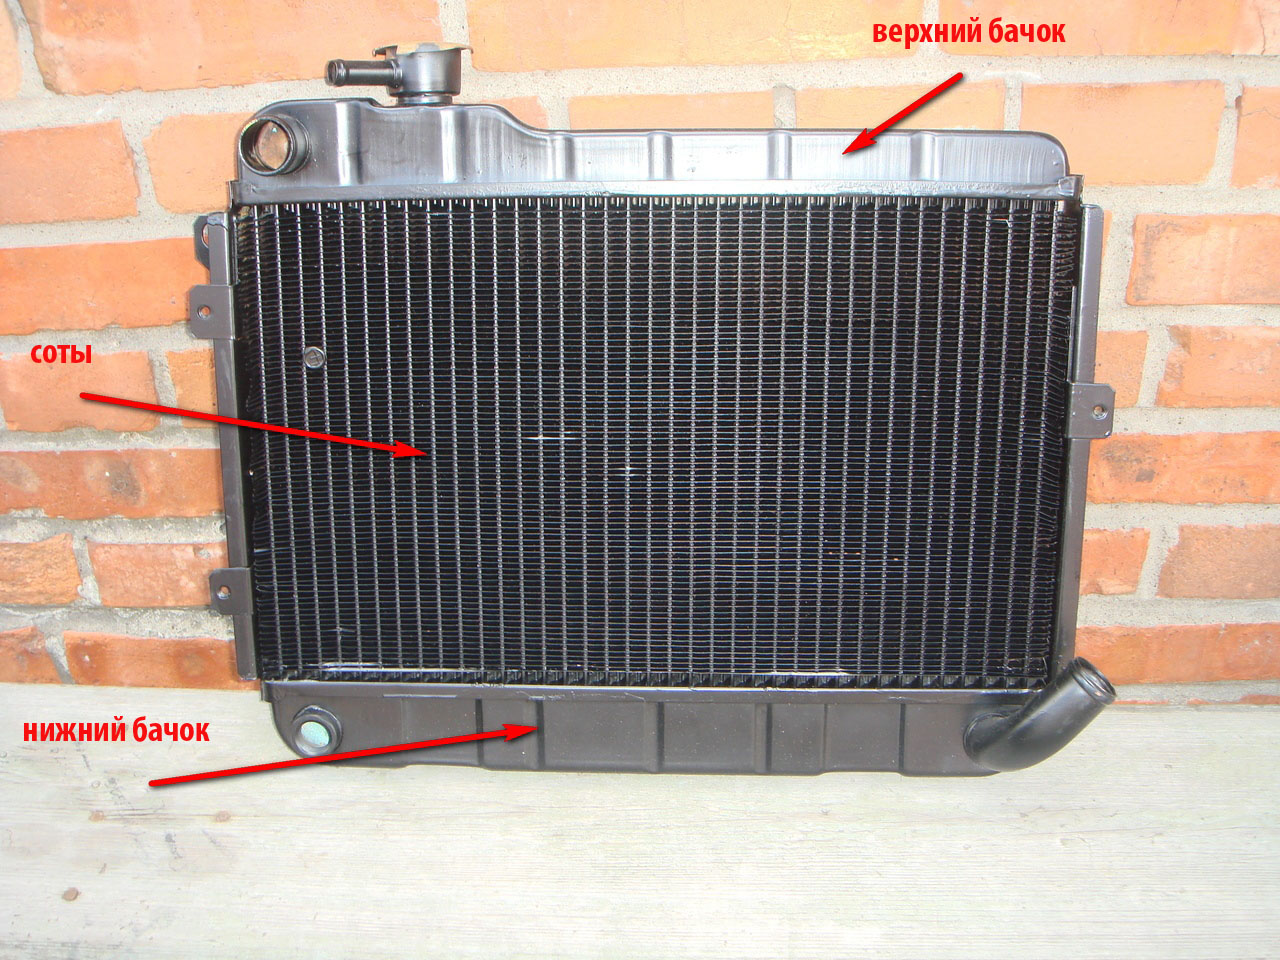 Замена вентилятора охлаждения Lada 2106